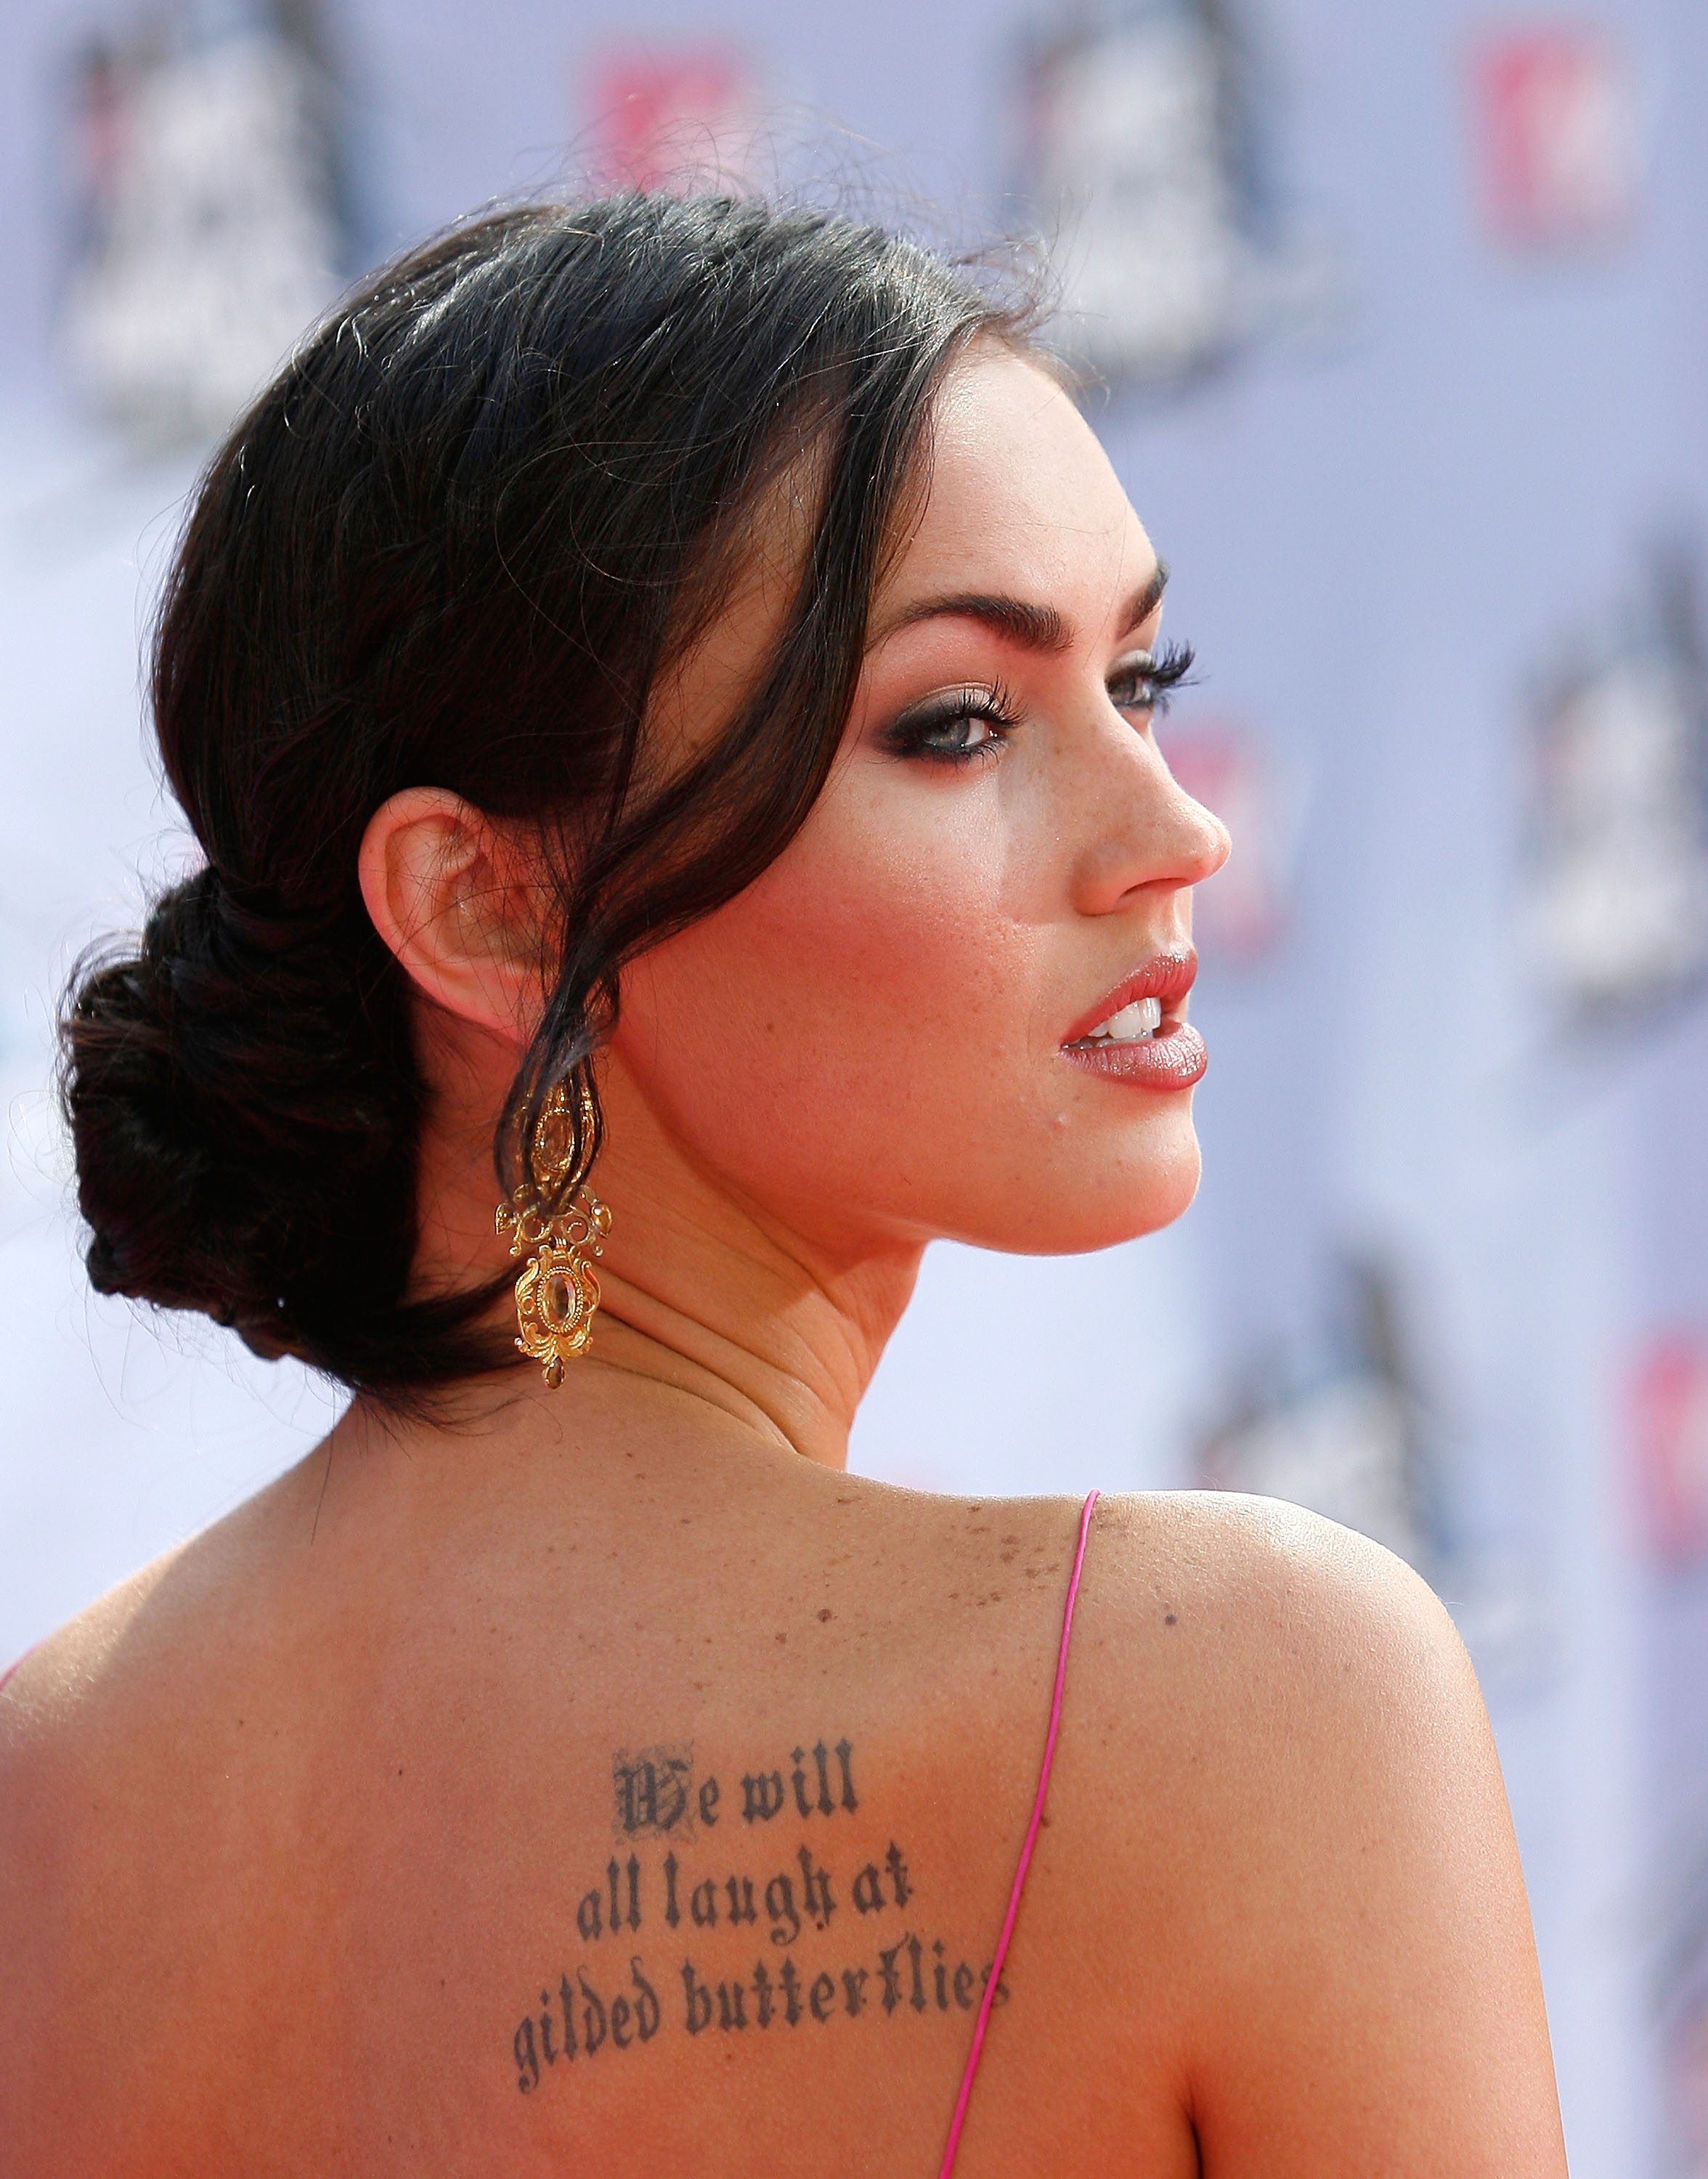 tattoos, women, Megan Fox, actress, celebrity - desktop wallpaper